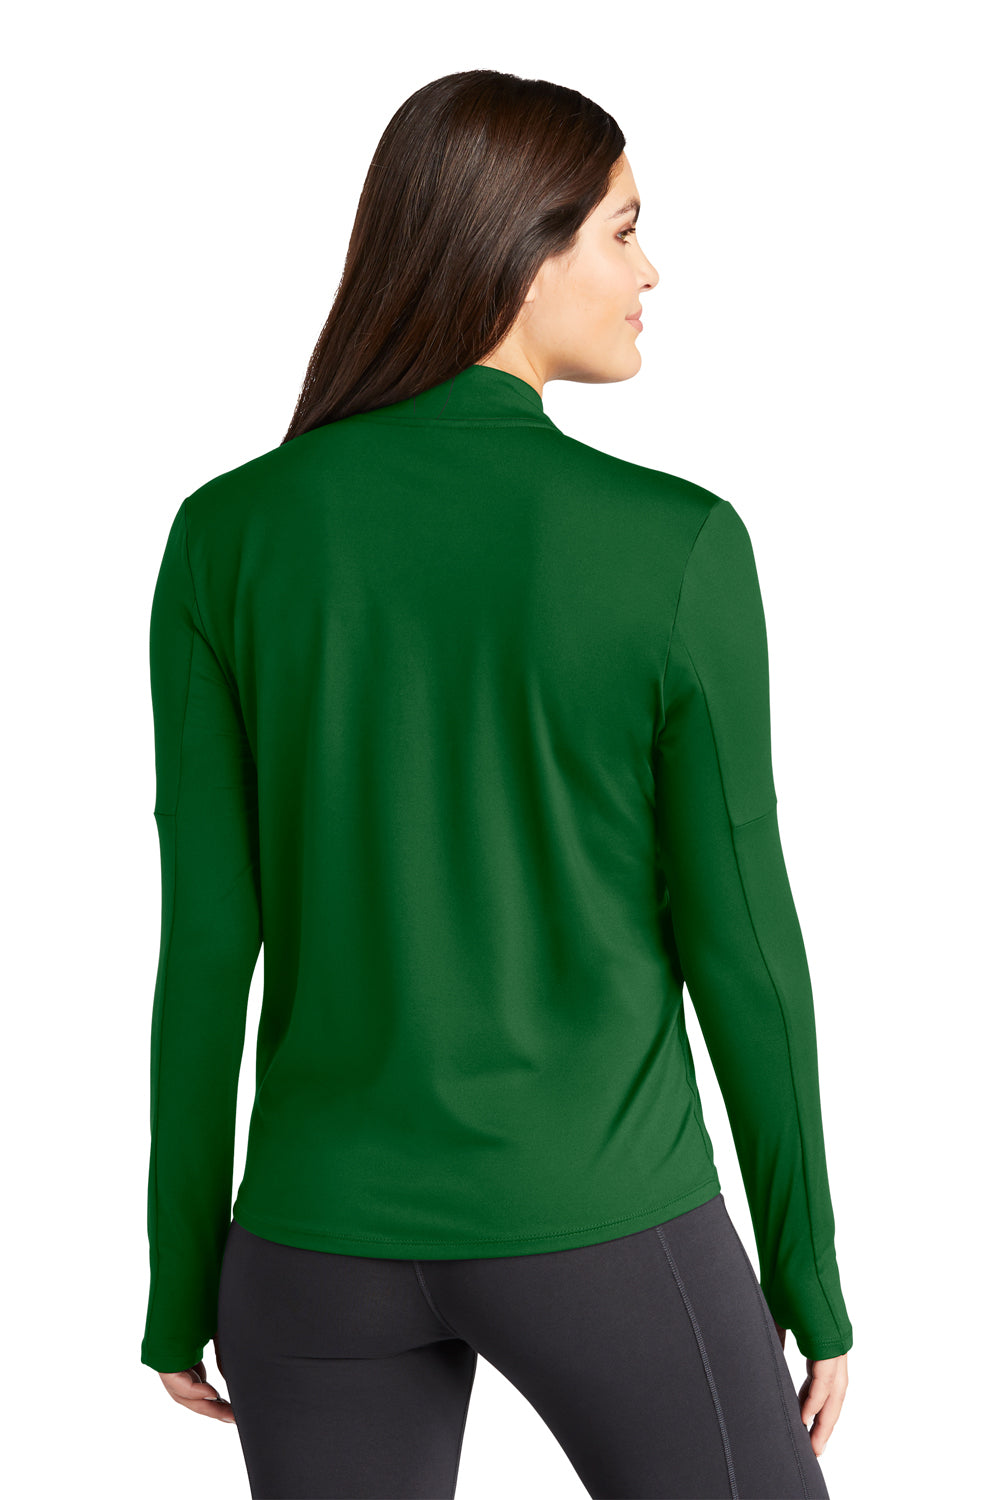 Nike NKDH4951 Womens Element Dri-Fit Moisture Wicking 1/4 Zip Sweatshirt Dark Green Model Back